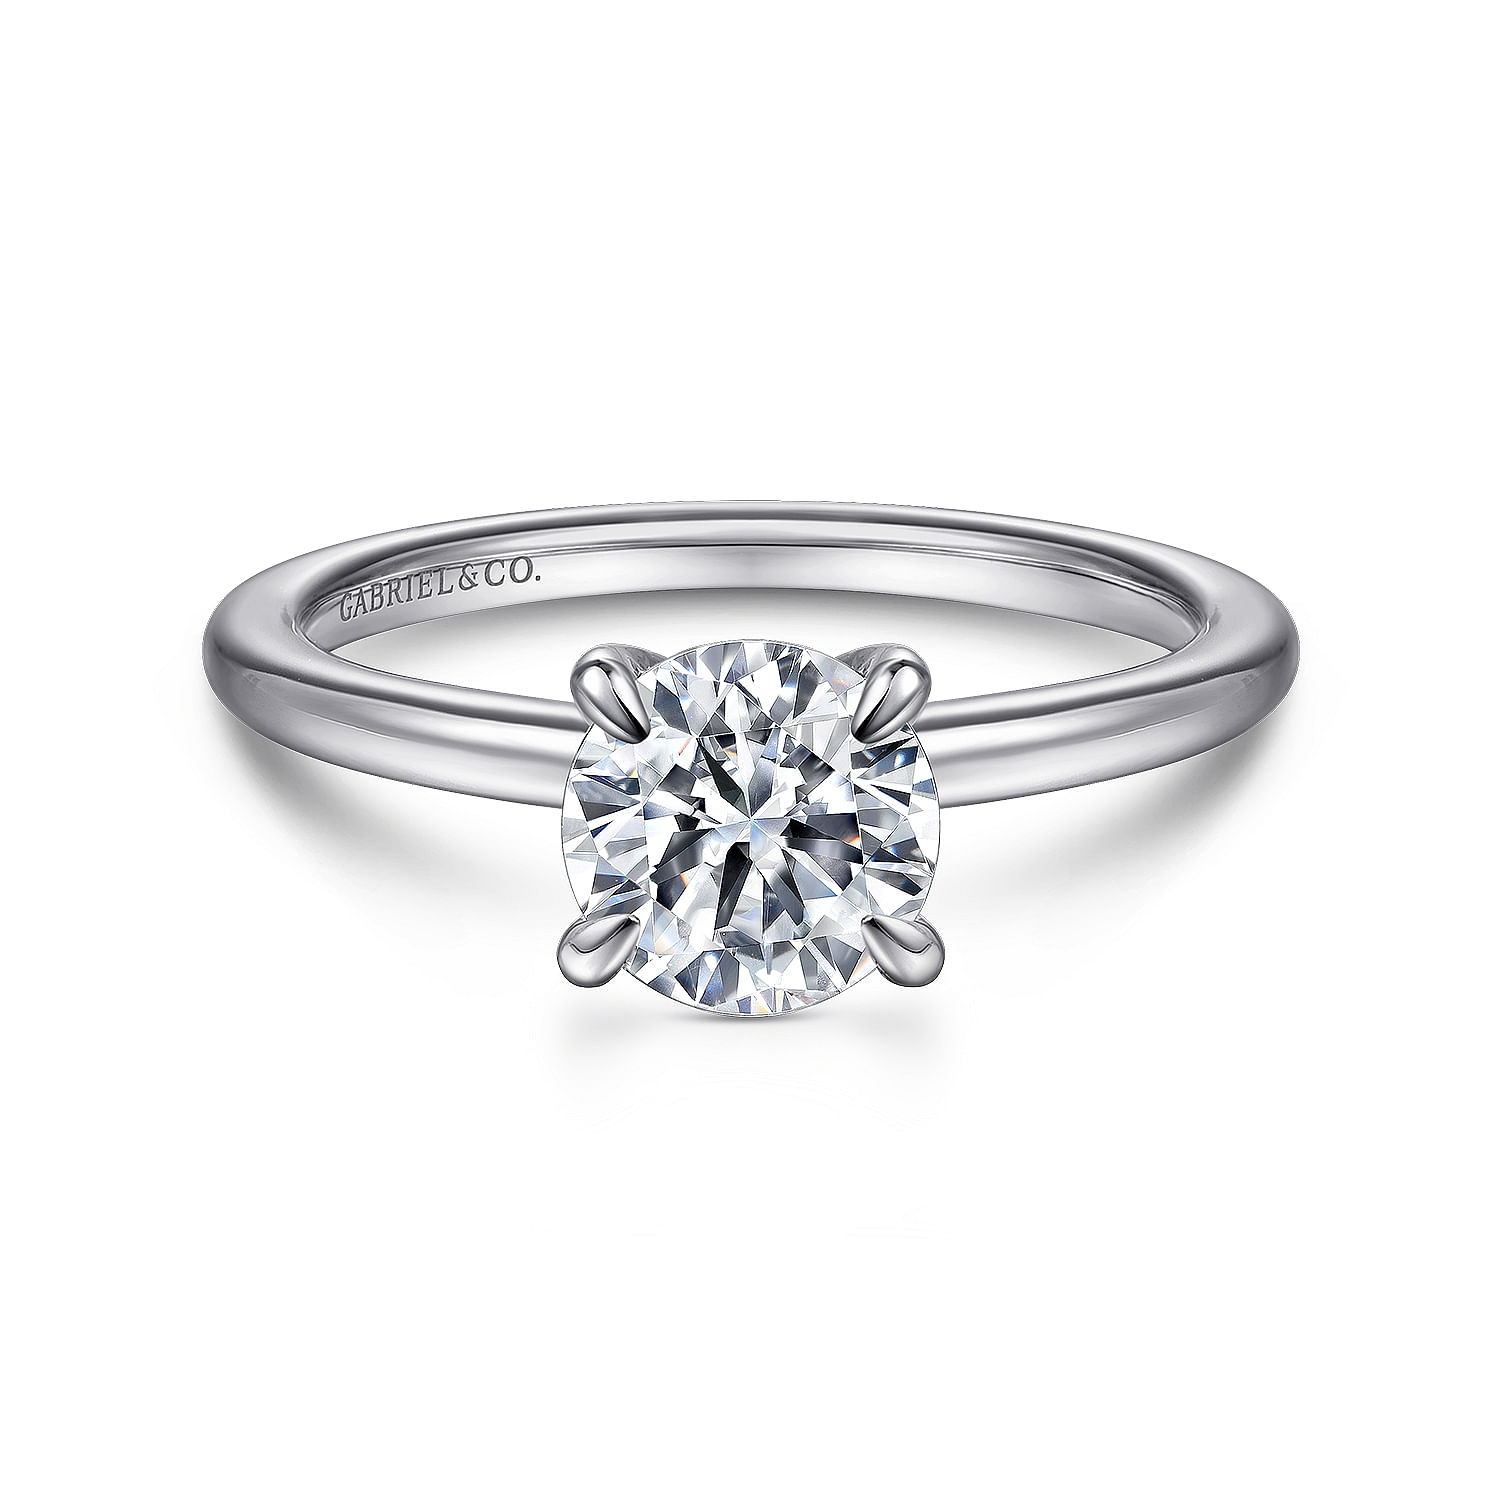 Ali---14K-White-Gold-Round-Diamond-Engagement-Ring1